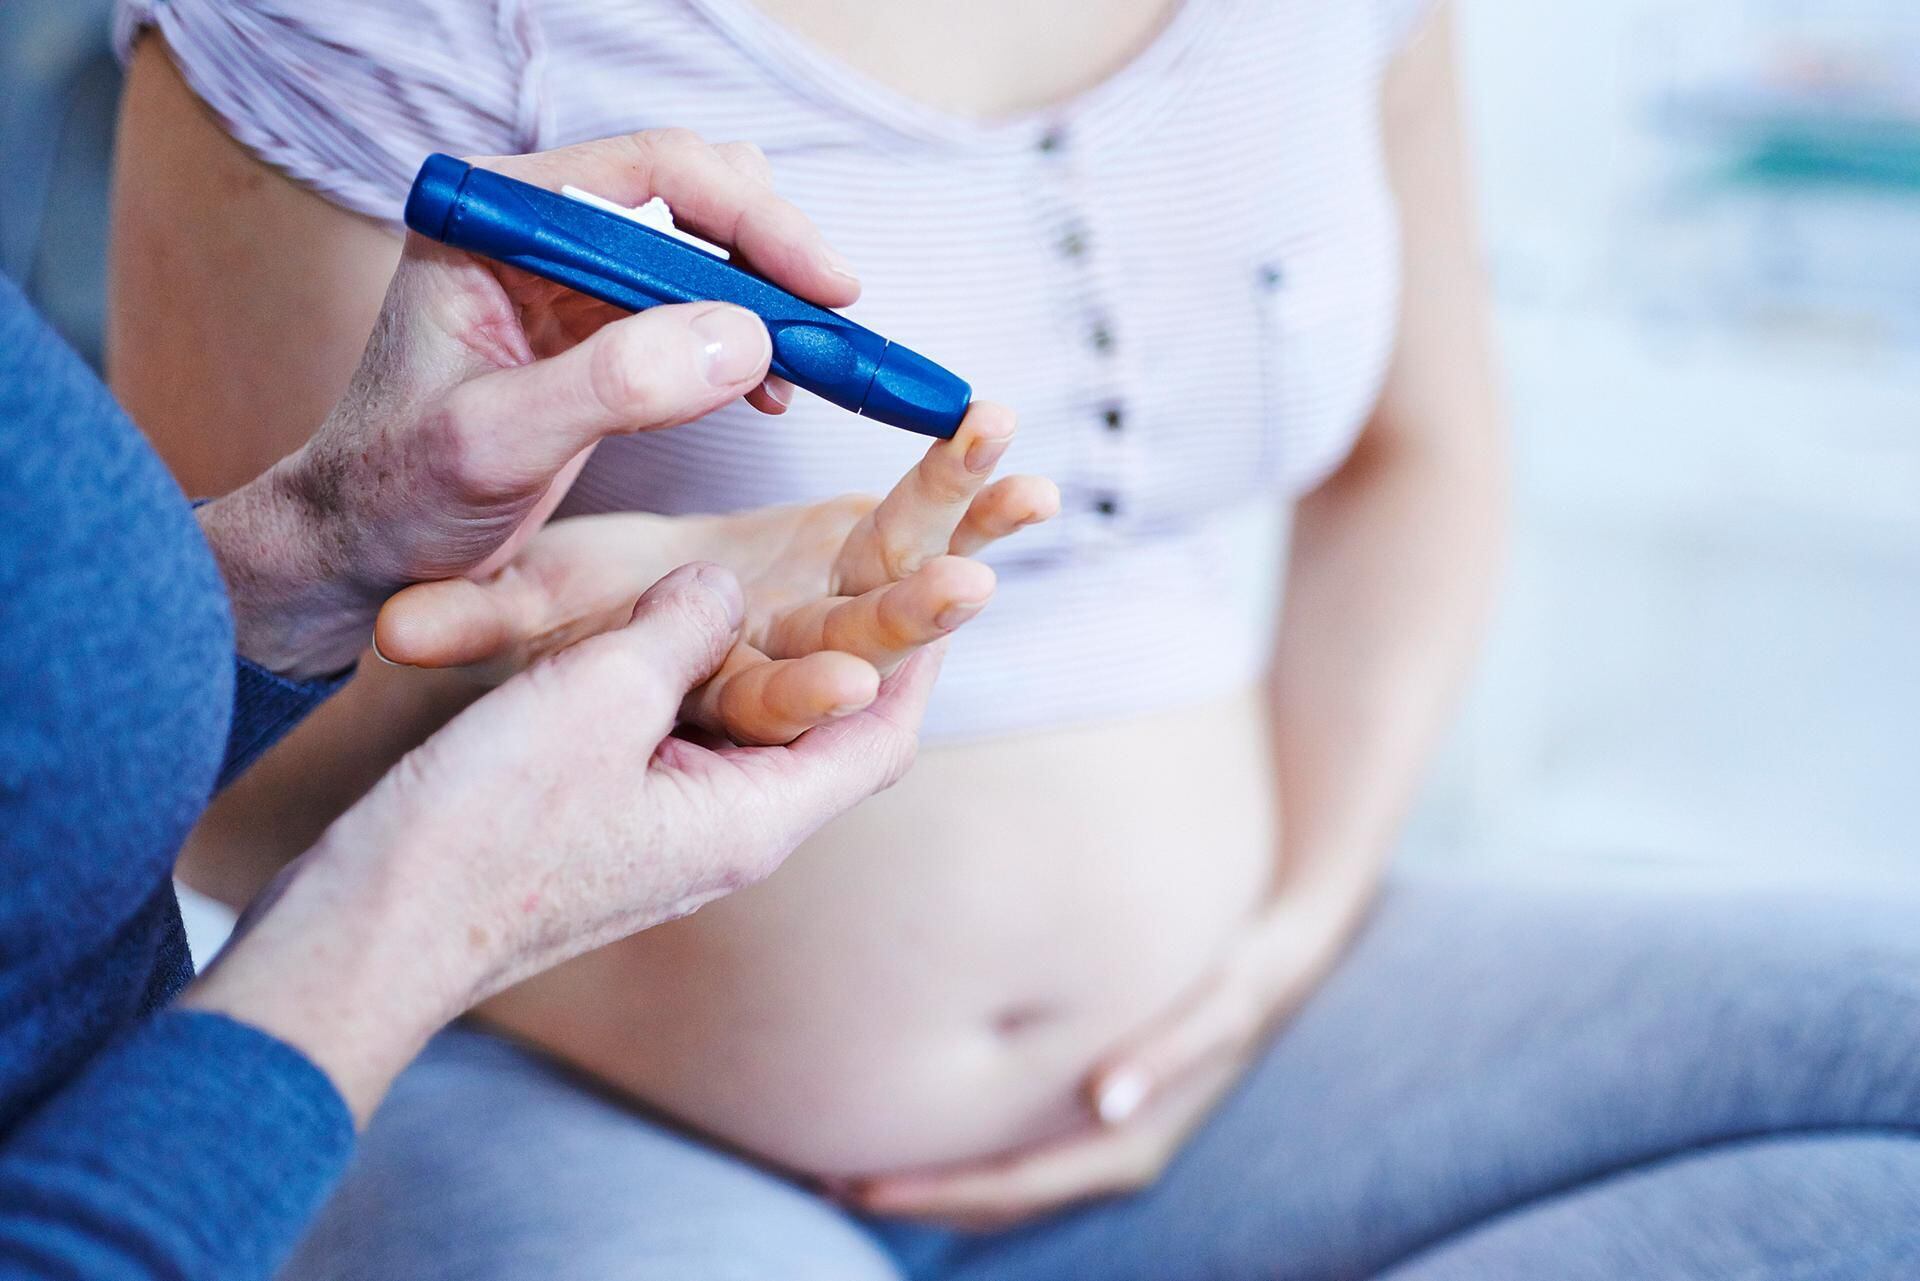 healthy pregnancy with diabetes